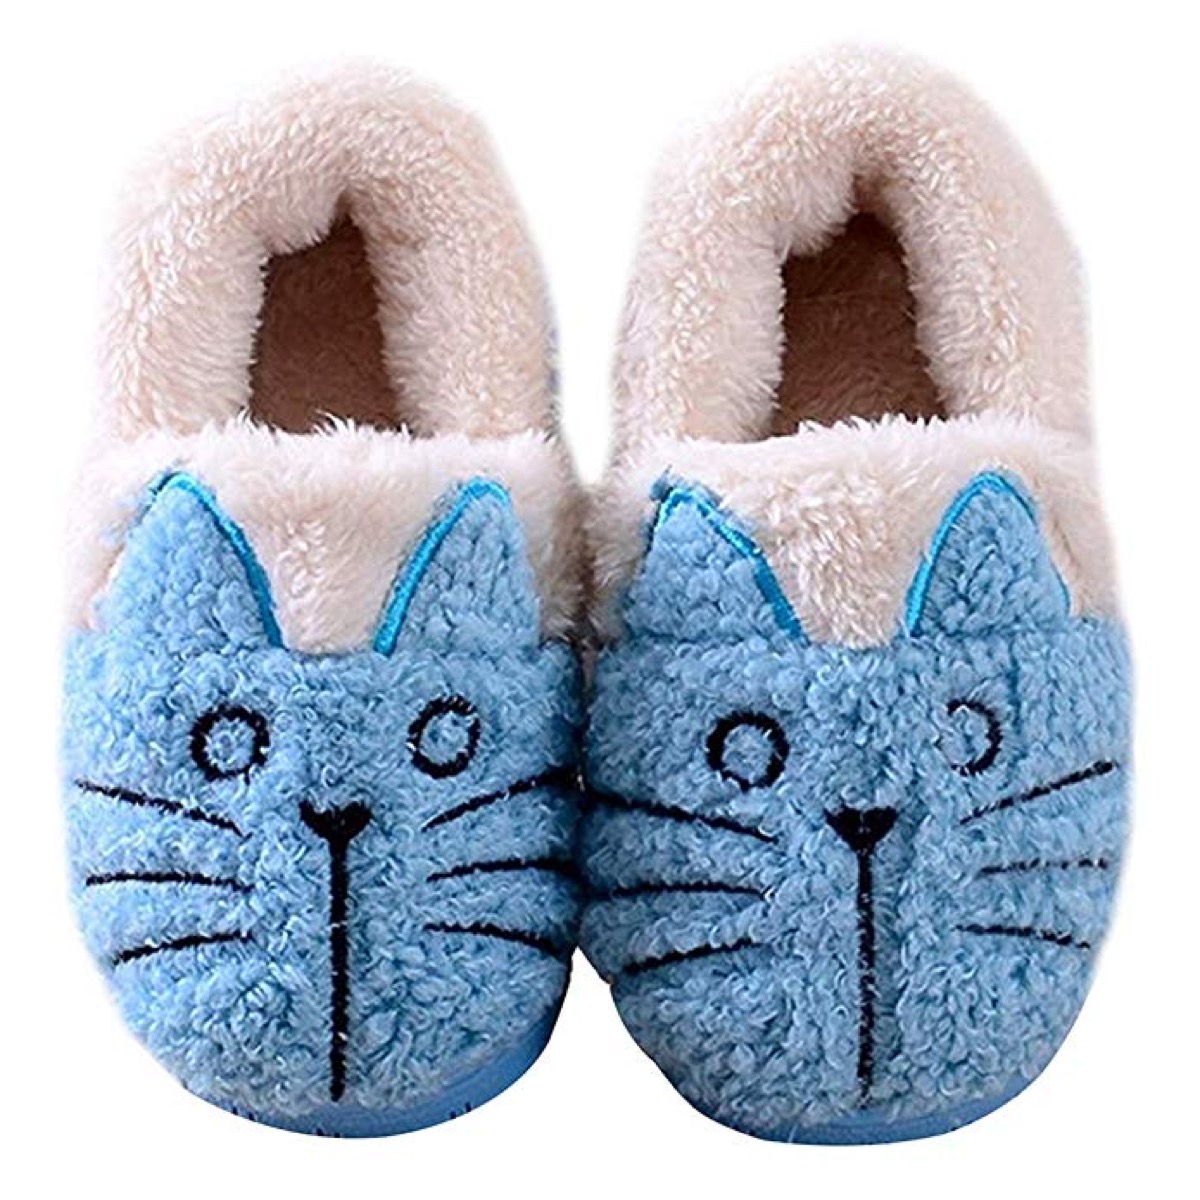 blue cat slippers, cat gifts, cat accessories